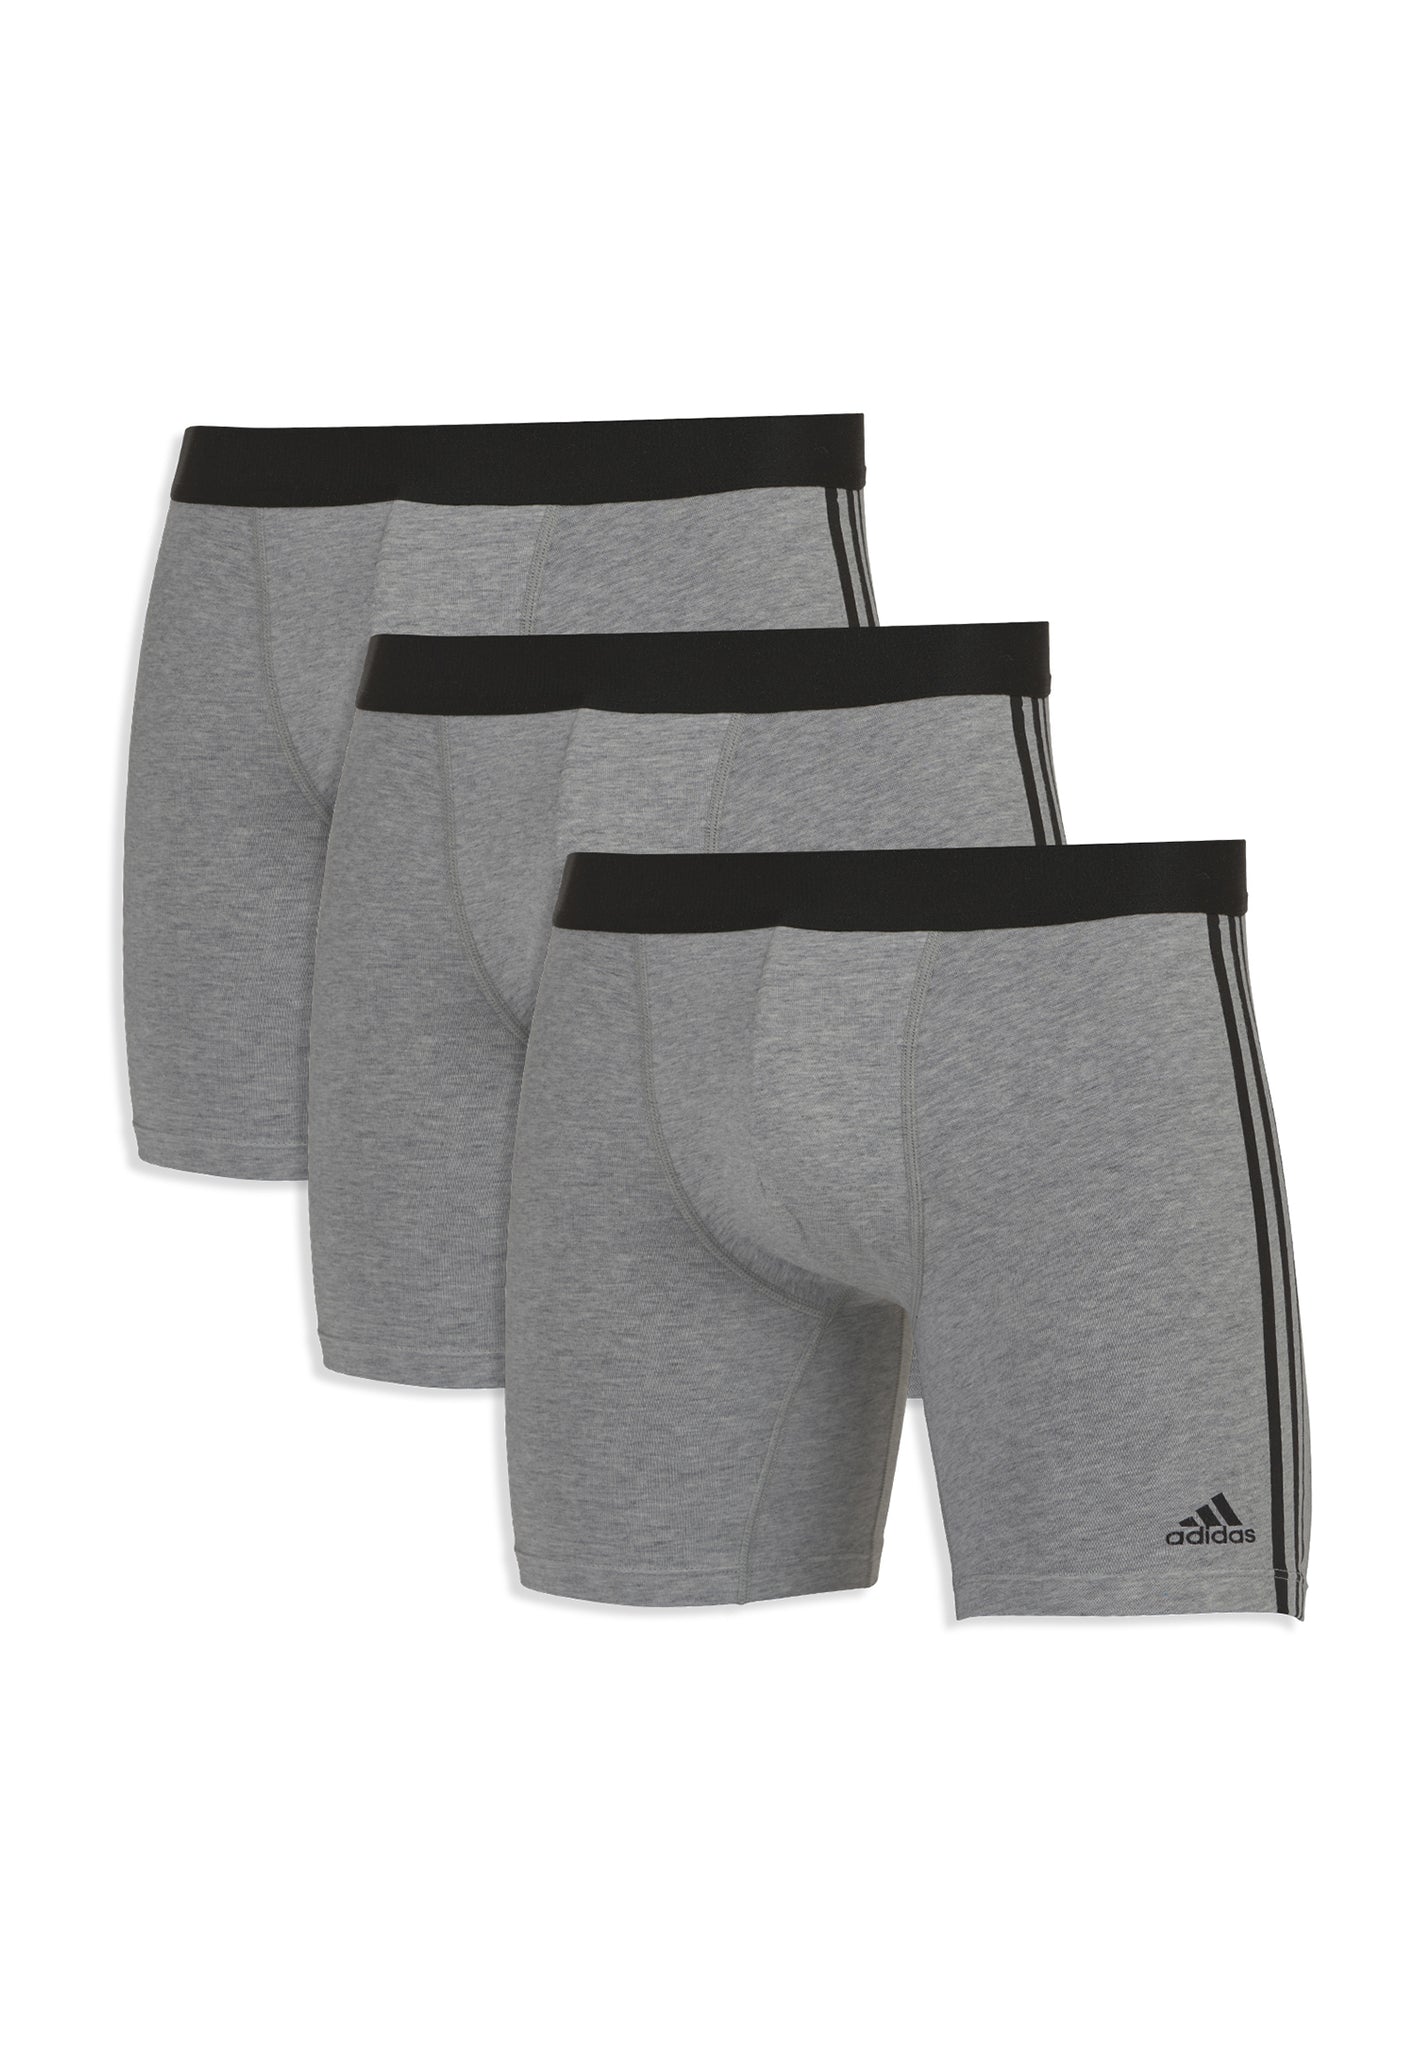 ADIDAS UNDERWEAR Adidas ACTIVE - Boxers x3 - Men's - grey/print/black -  Private Sport Shop